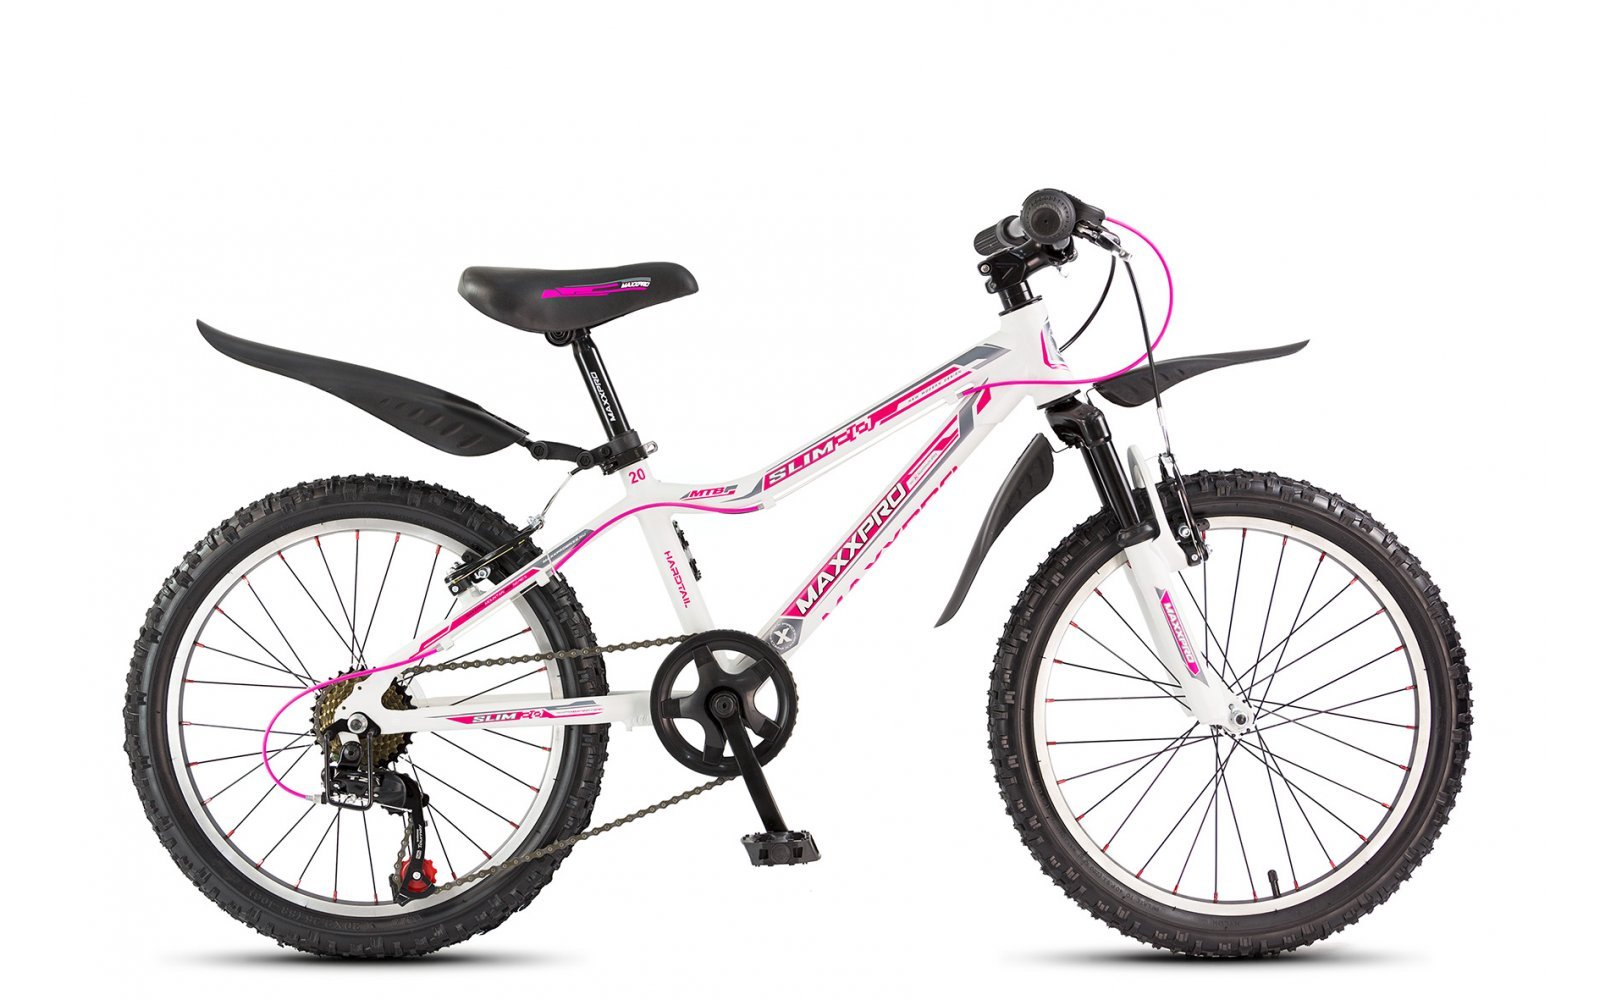 Велосипед для девочки 13 лет. Велосипед MAXXPRO 20. МАКСПРО велосипед детский 20. Велосипед MAXXPRO 29. Подростковый горный (MTB) велосипед MAXXPRO Slim 24.